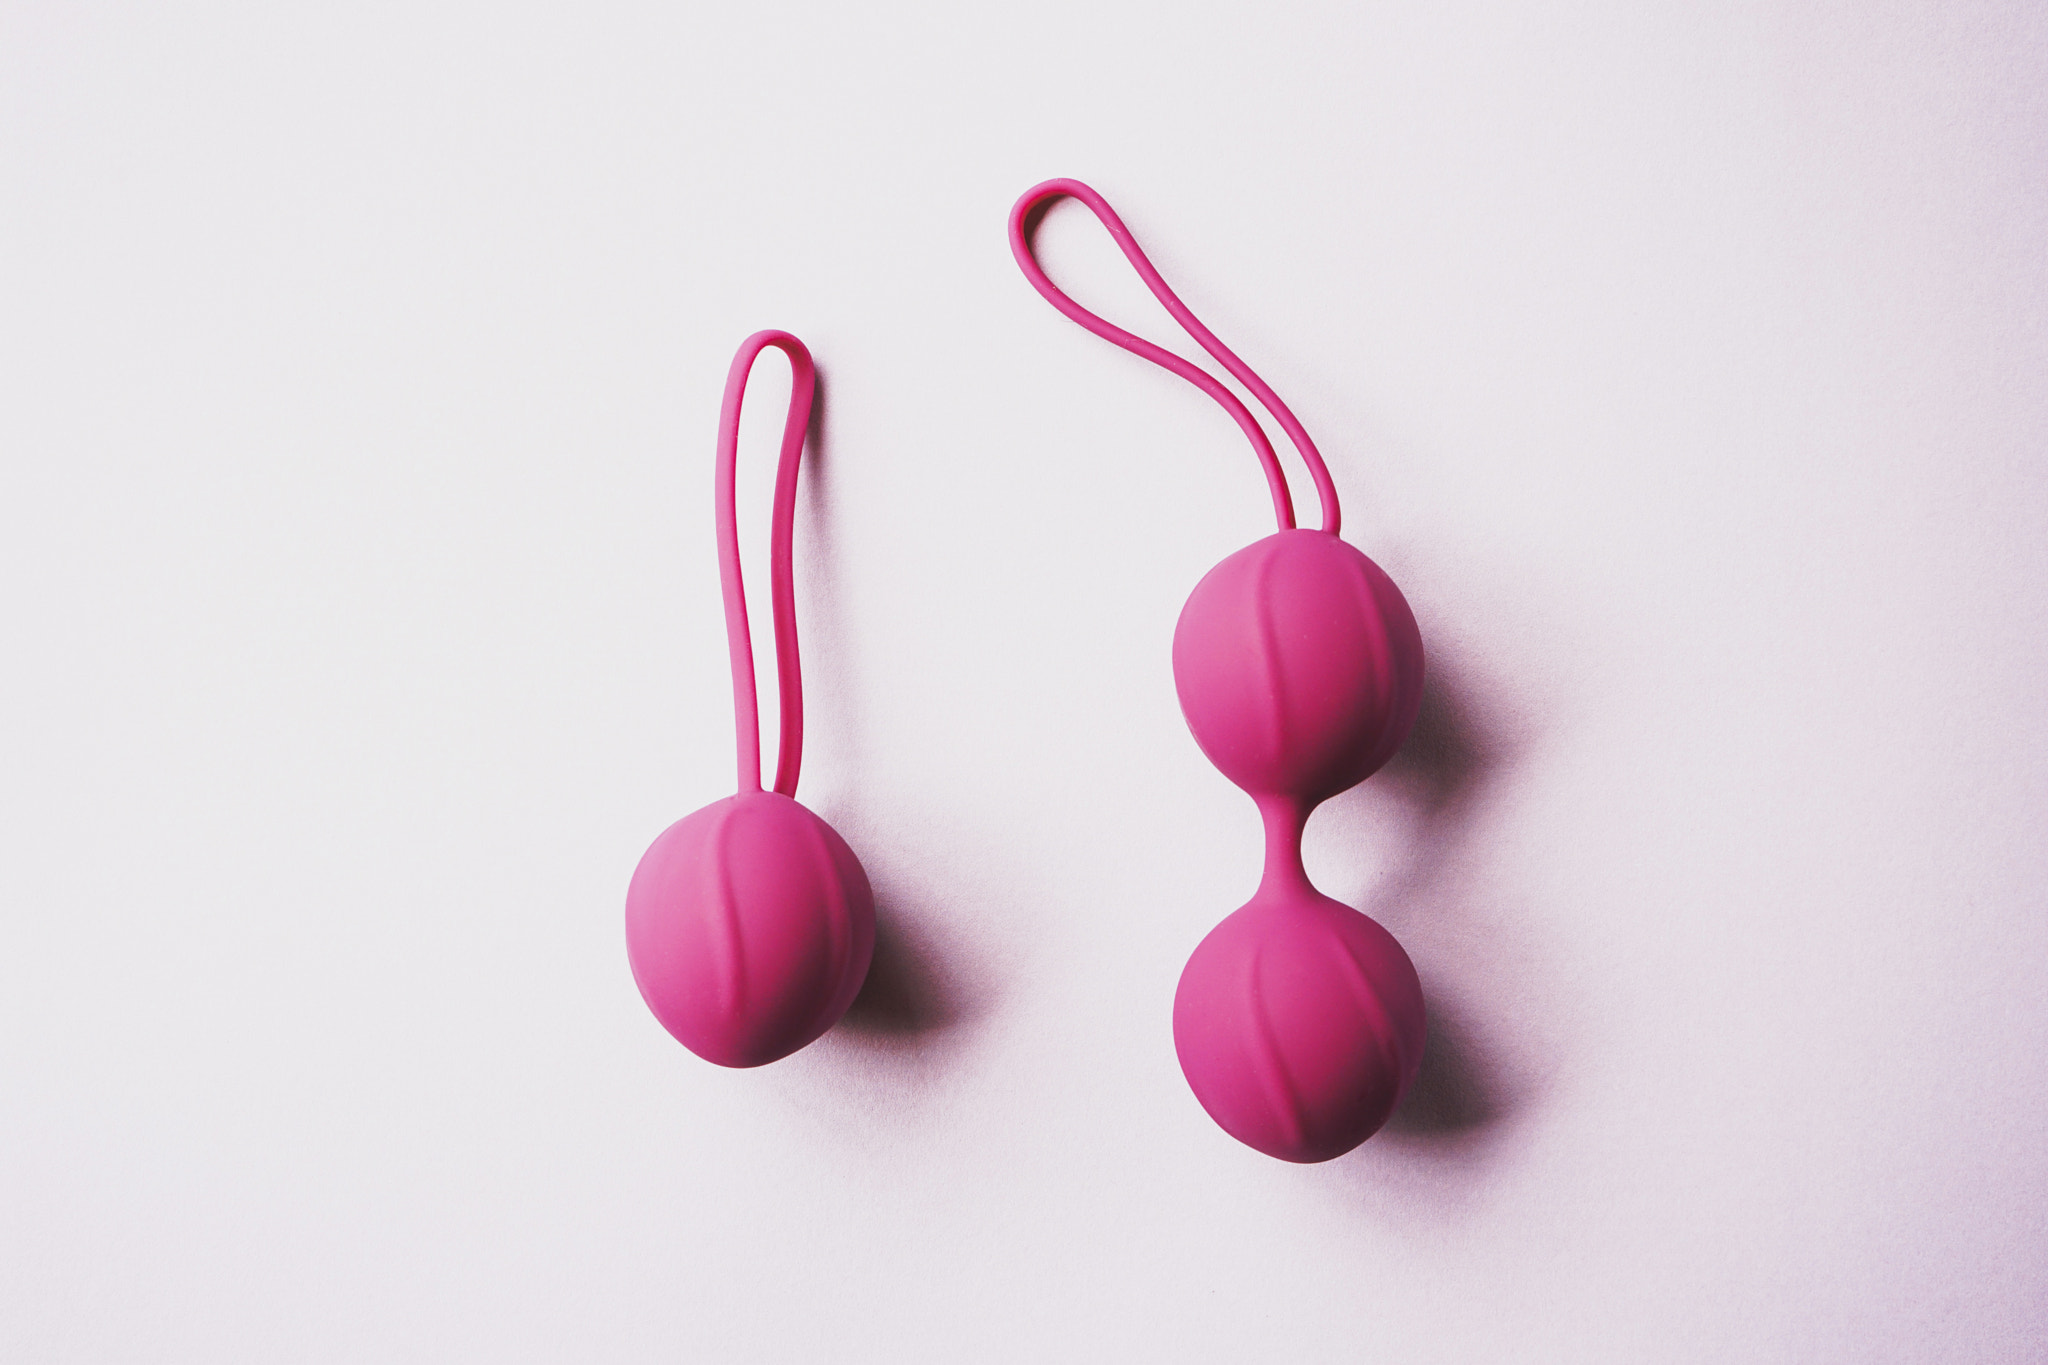 Dark pink chinese balls for kegel exercise